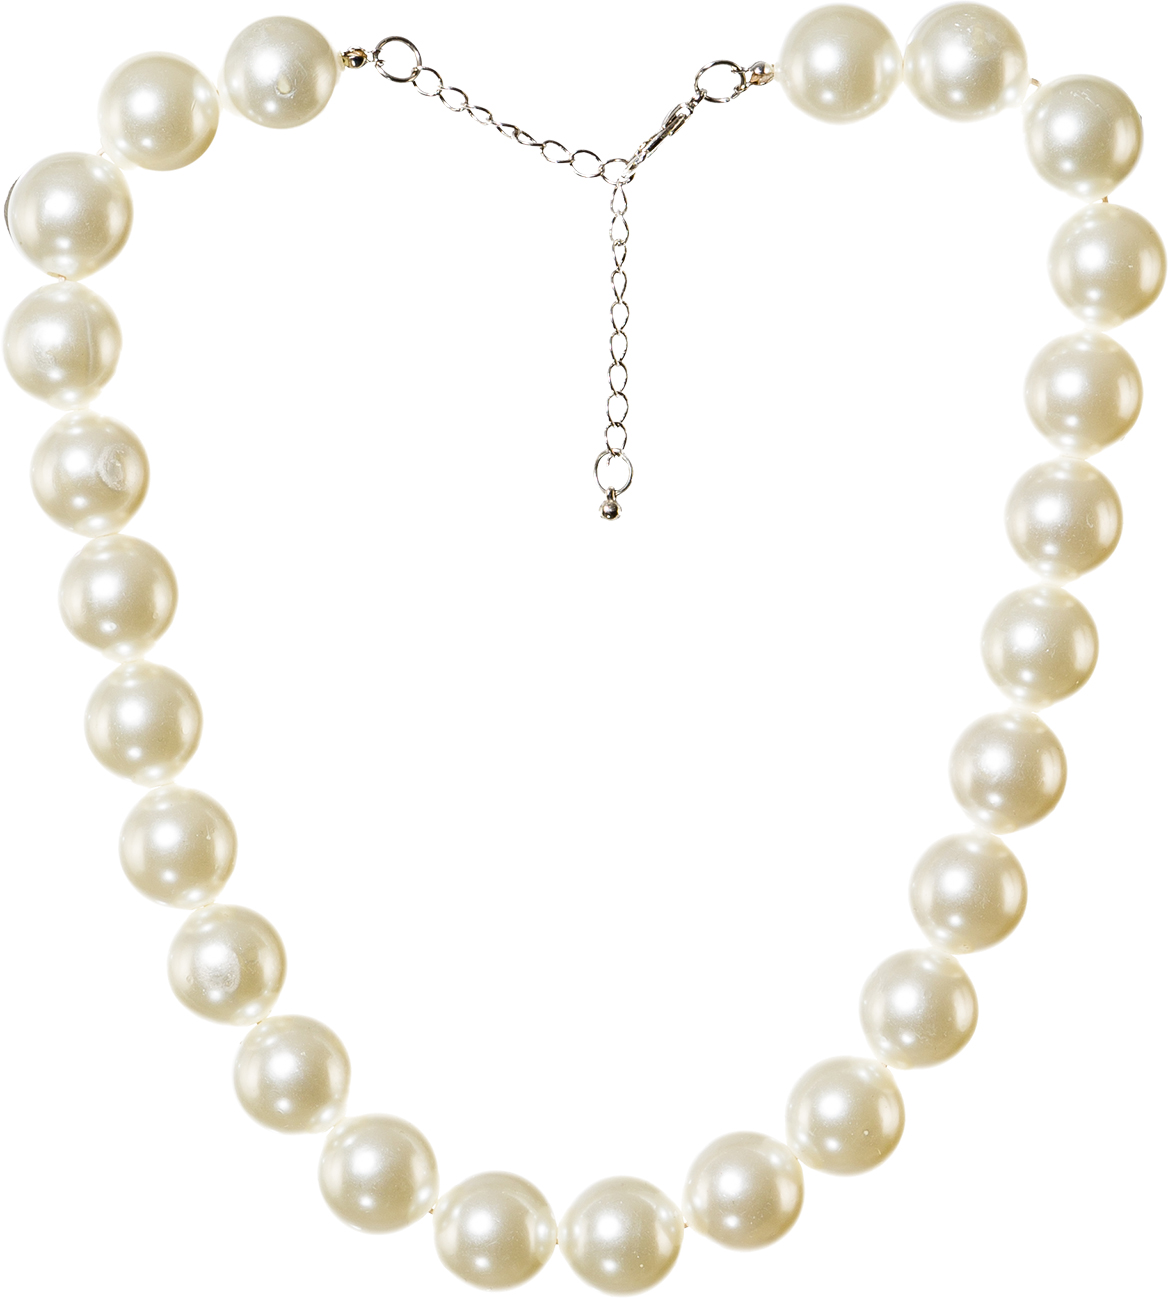 Collier de perles courtes, grosses perles